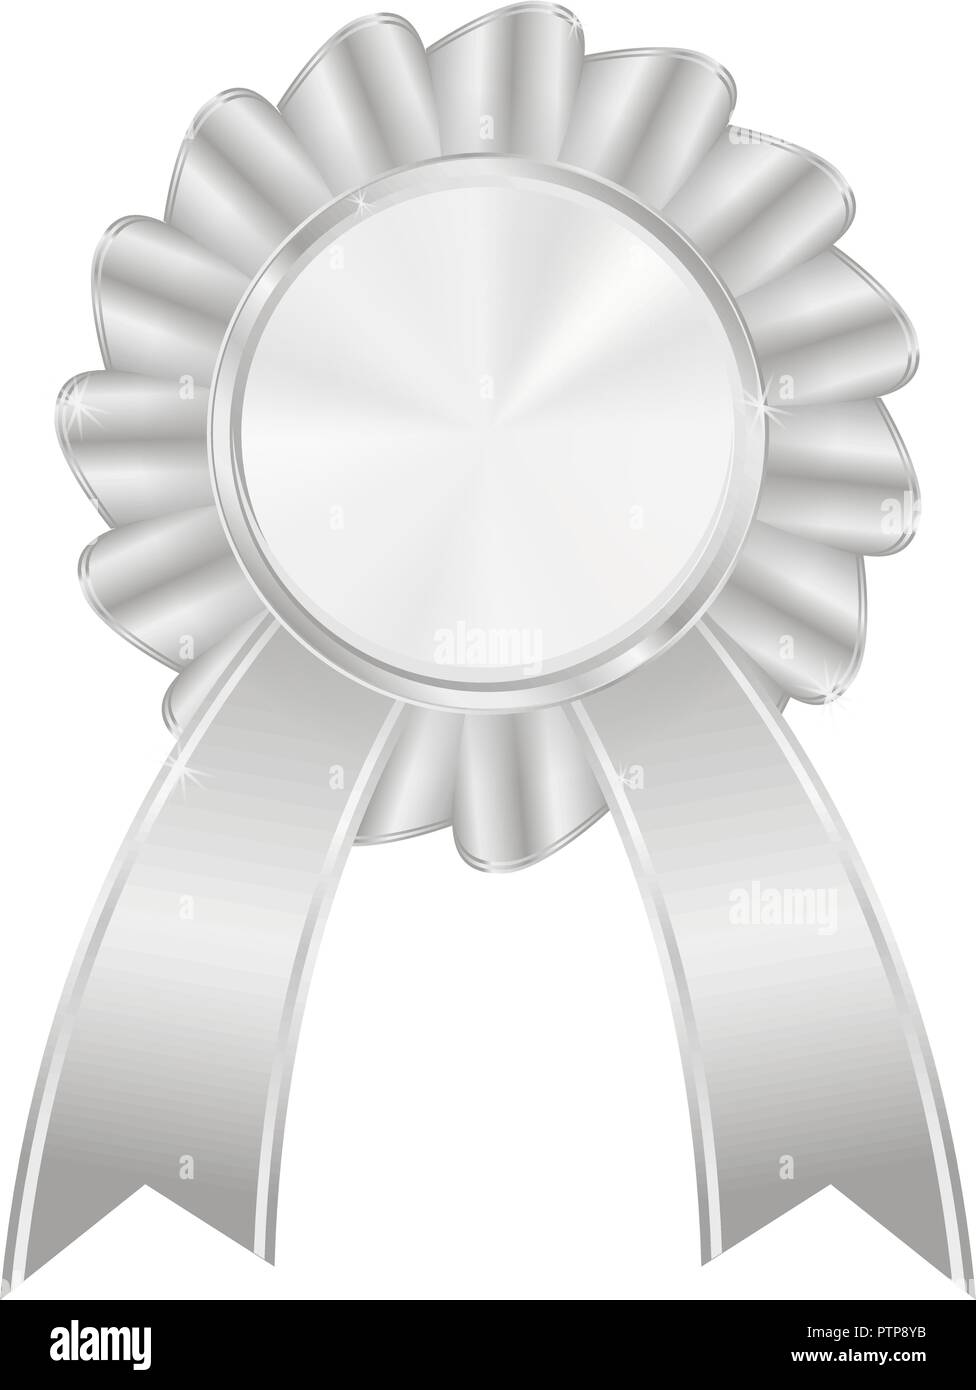 https://c8.alamy.com/comp/PTP8YB/silver-award-badge-PTP8YB.jpg